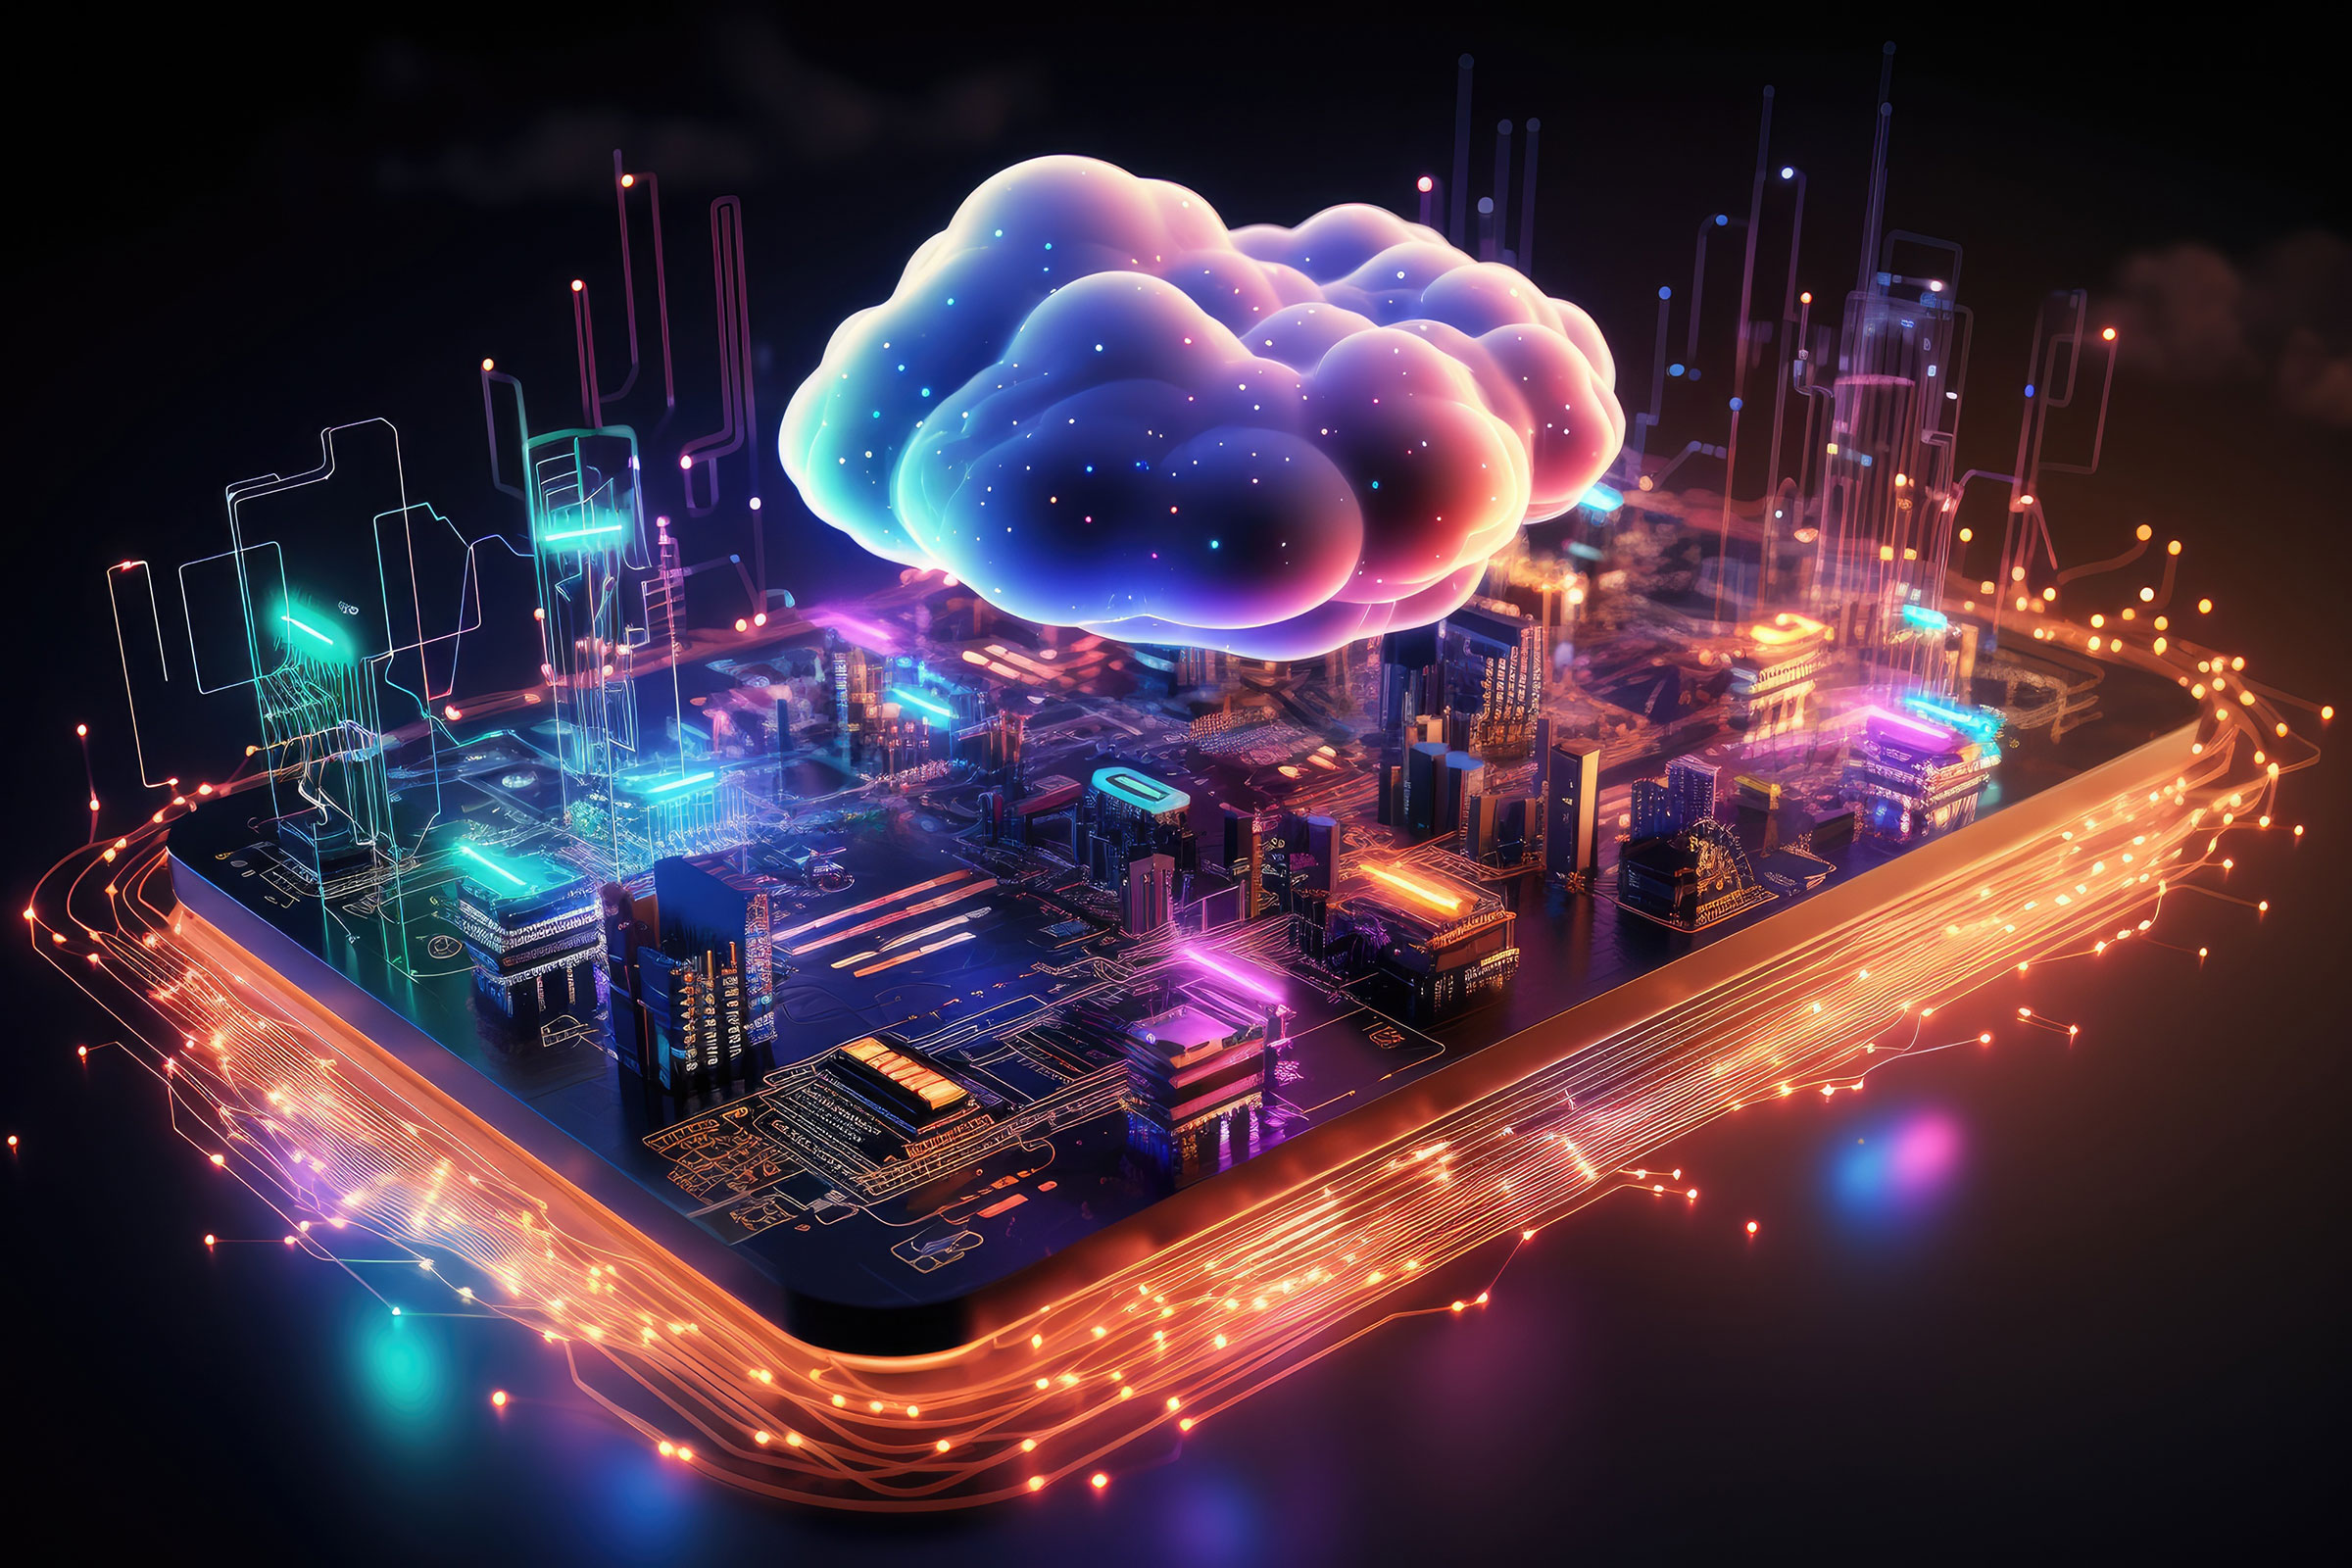 Cloud over digital circuit board